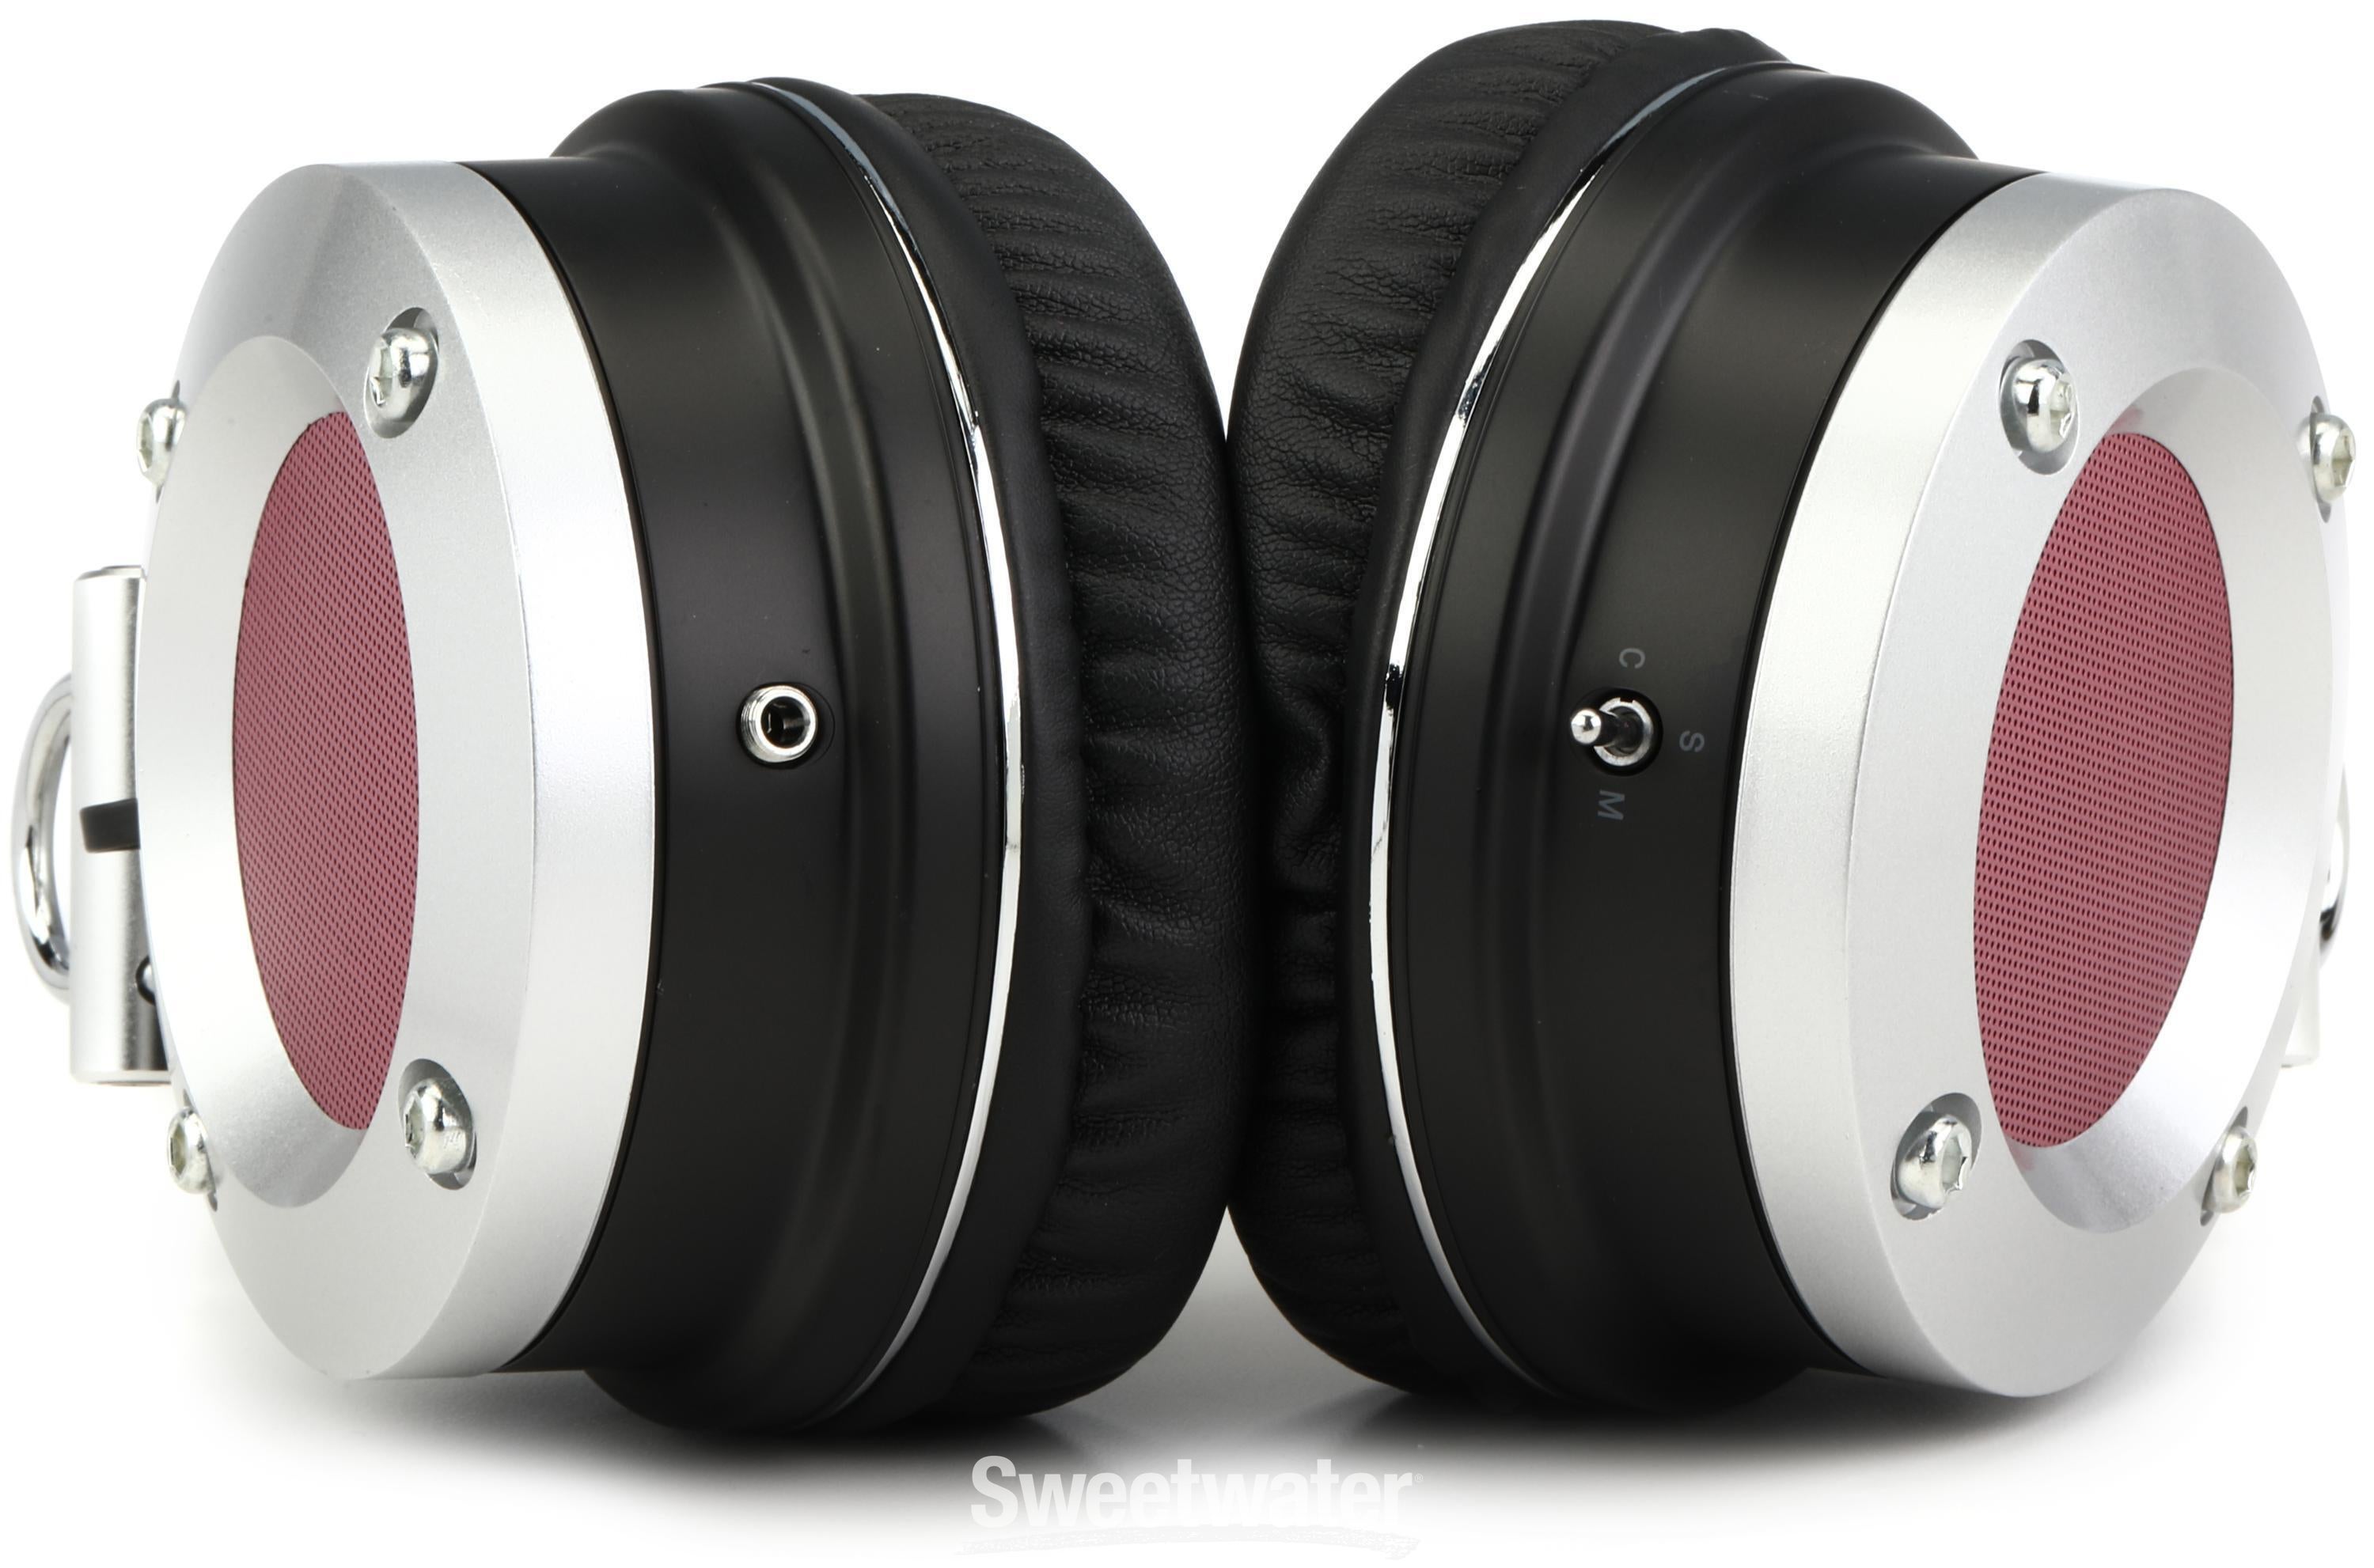 Avantone Pro MP1 Mixphones Multi-mode Reference Headphones with